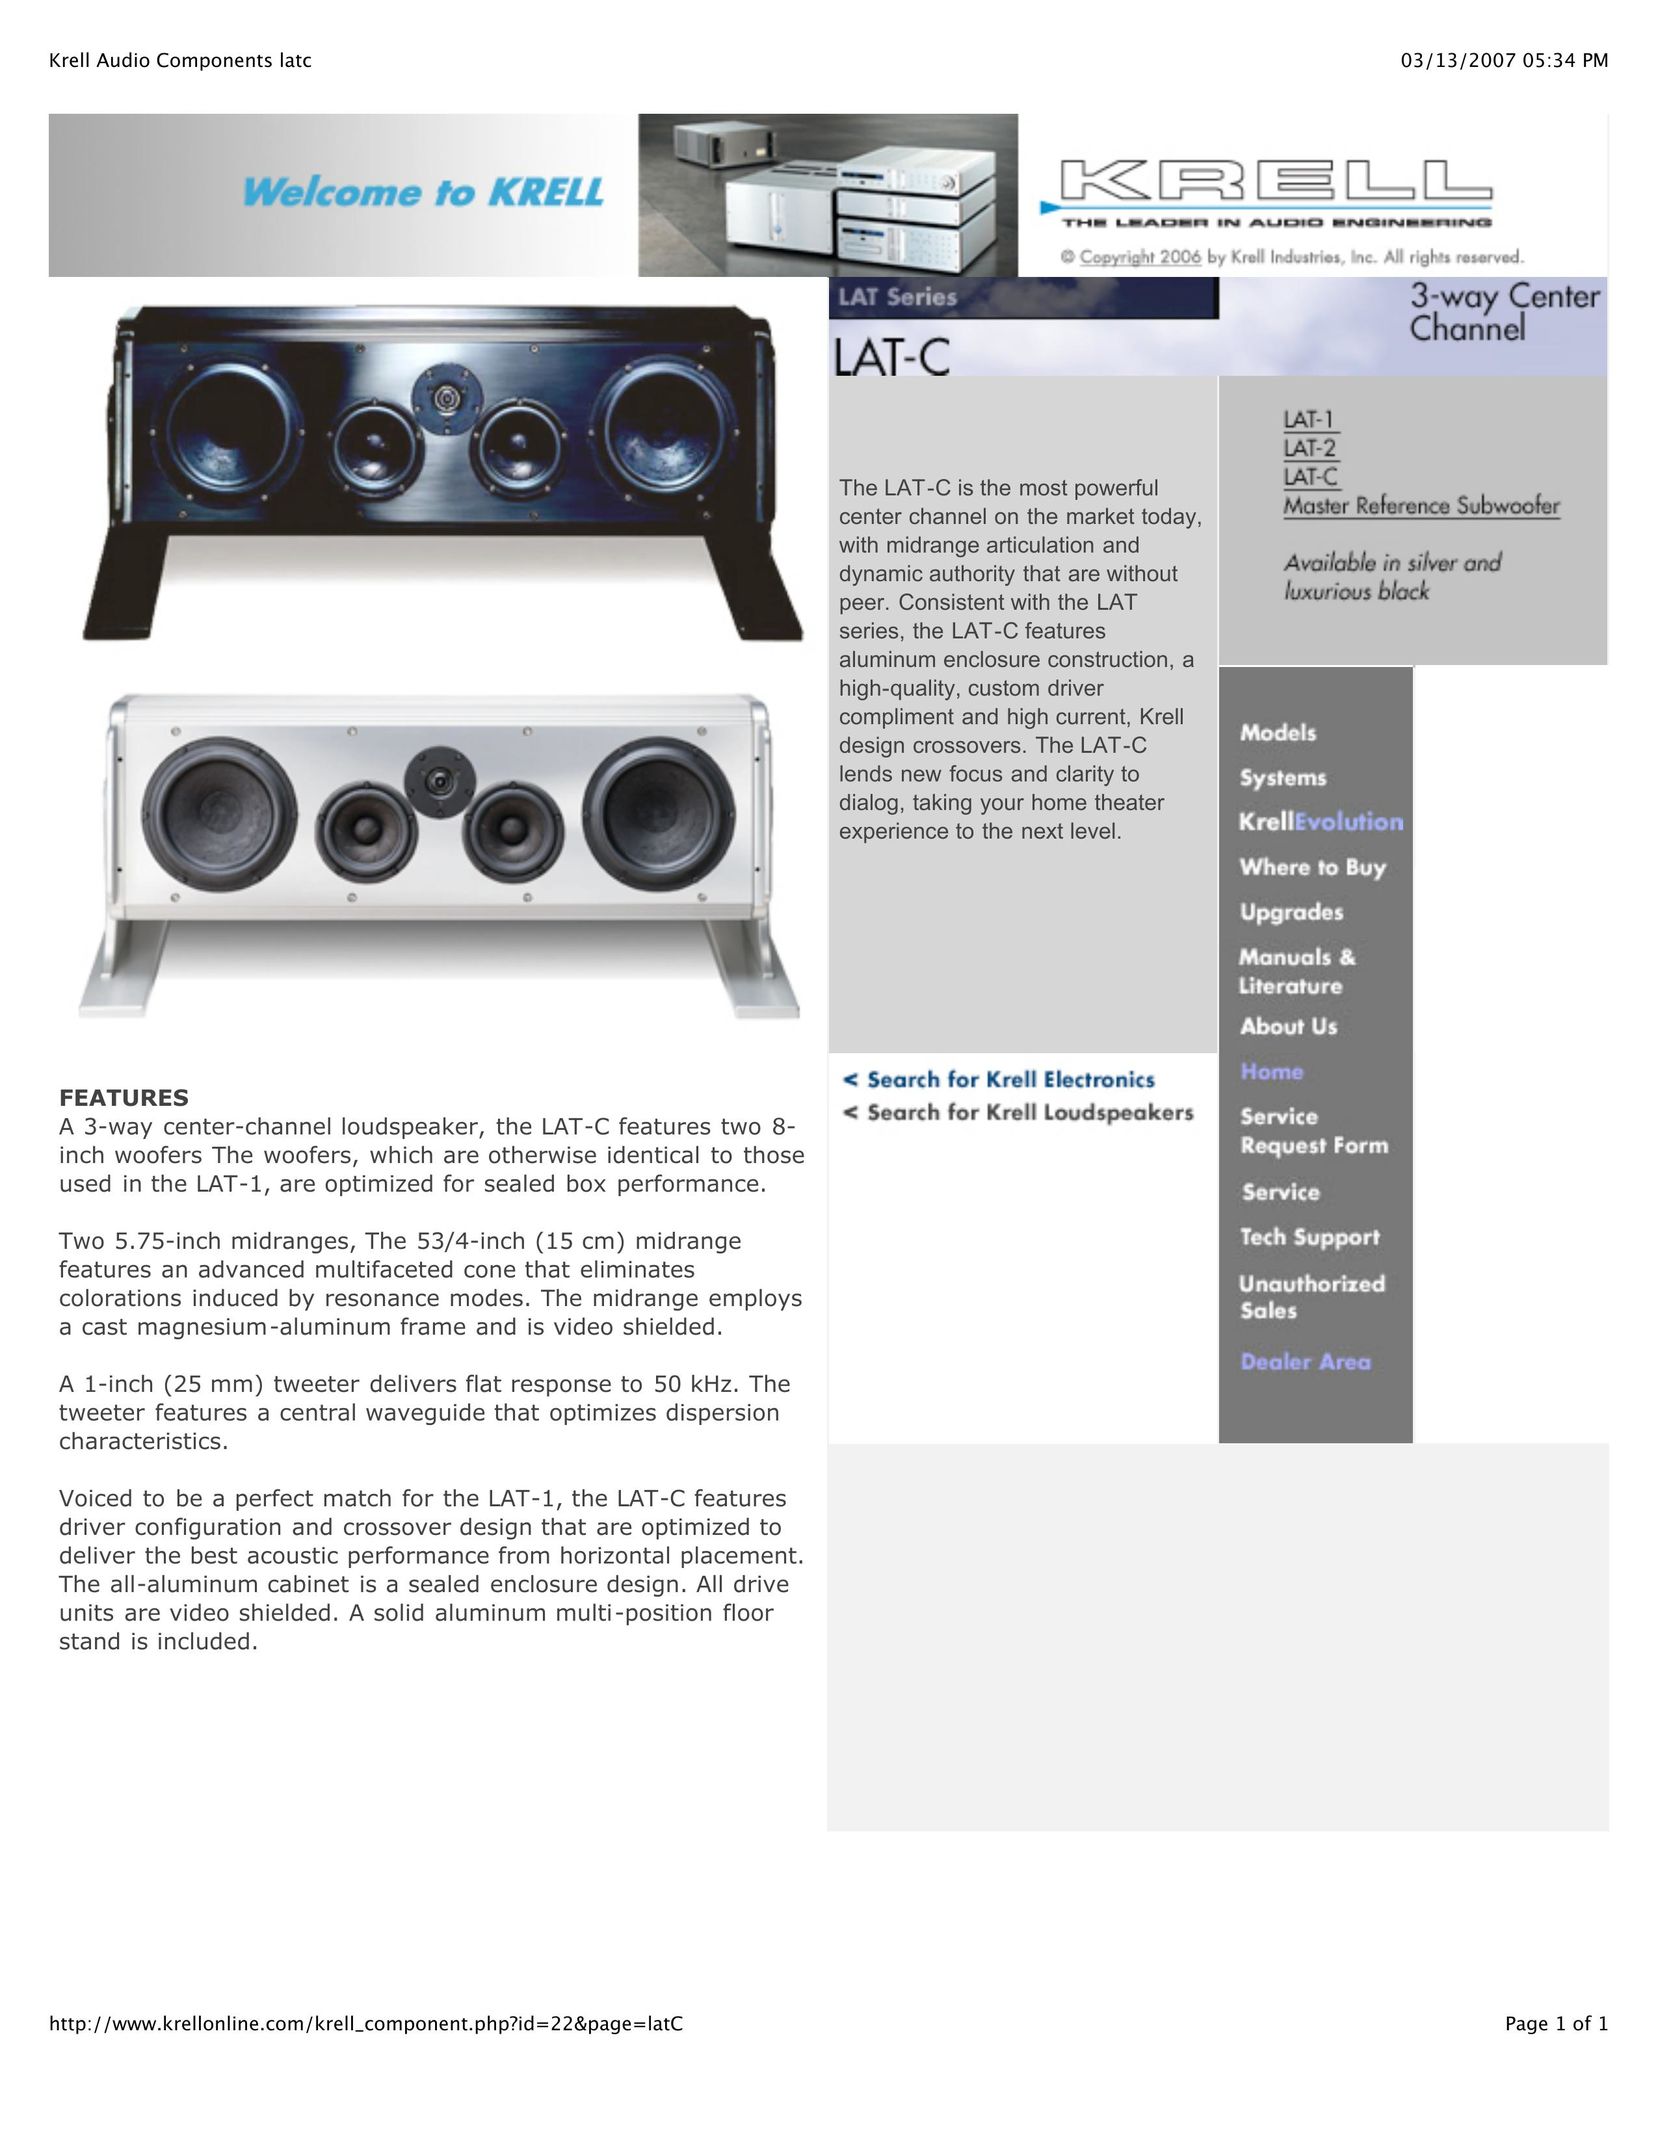 Krell Industries LAT-1 Speaker User Manual